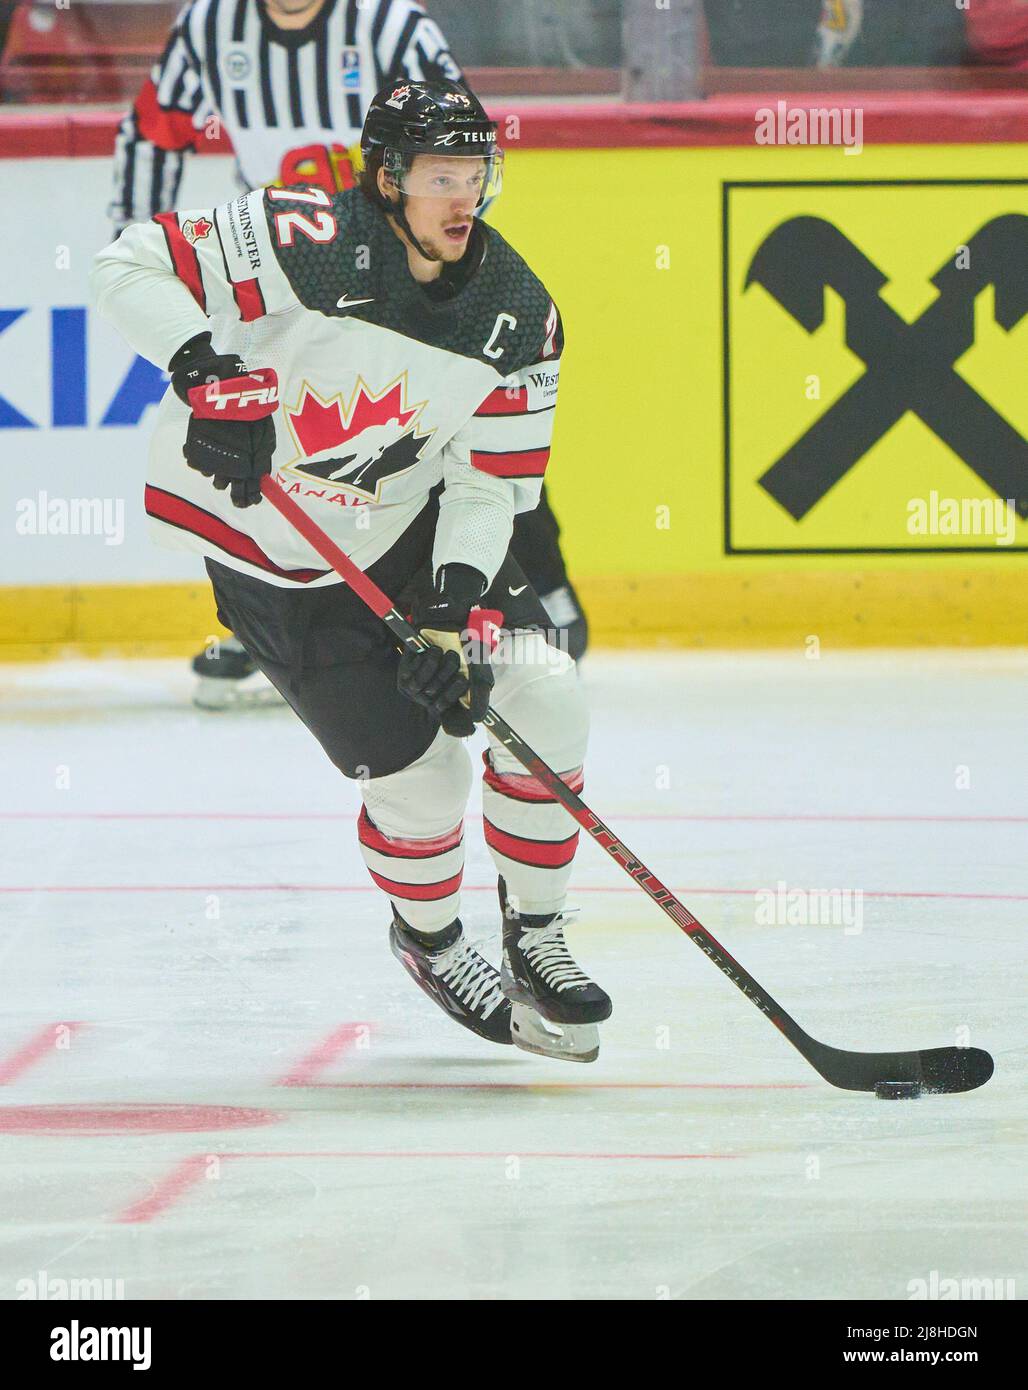 SNAPSHOTS: Thomas Chabot named Captain Canada at IIHF world championship  tourney